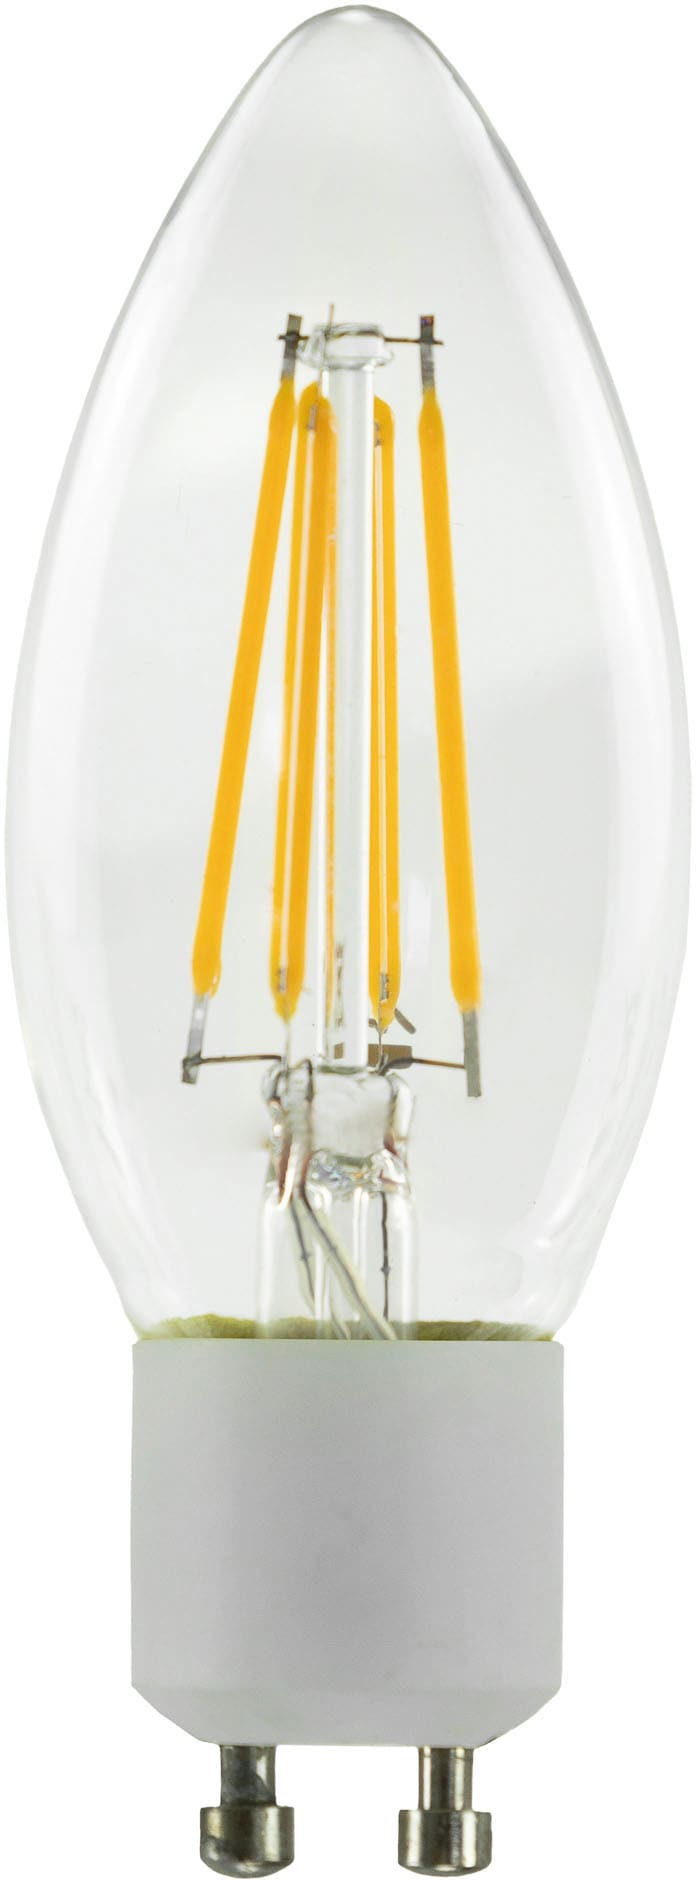 SEGULA LED-Leuchtmittel »LED Kerze - GU10«, GU10, 1 St., Extra-Warmweiß, LED Kerze - GU10, 2200K, klar, 3W, CRI 90, dimmbar